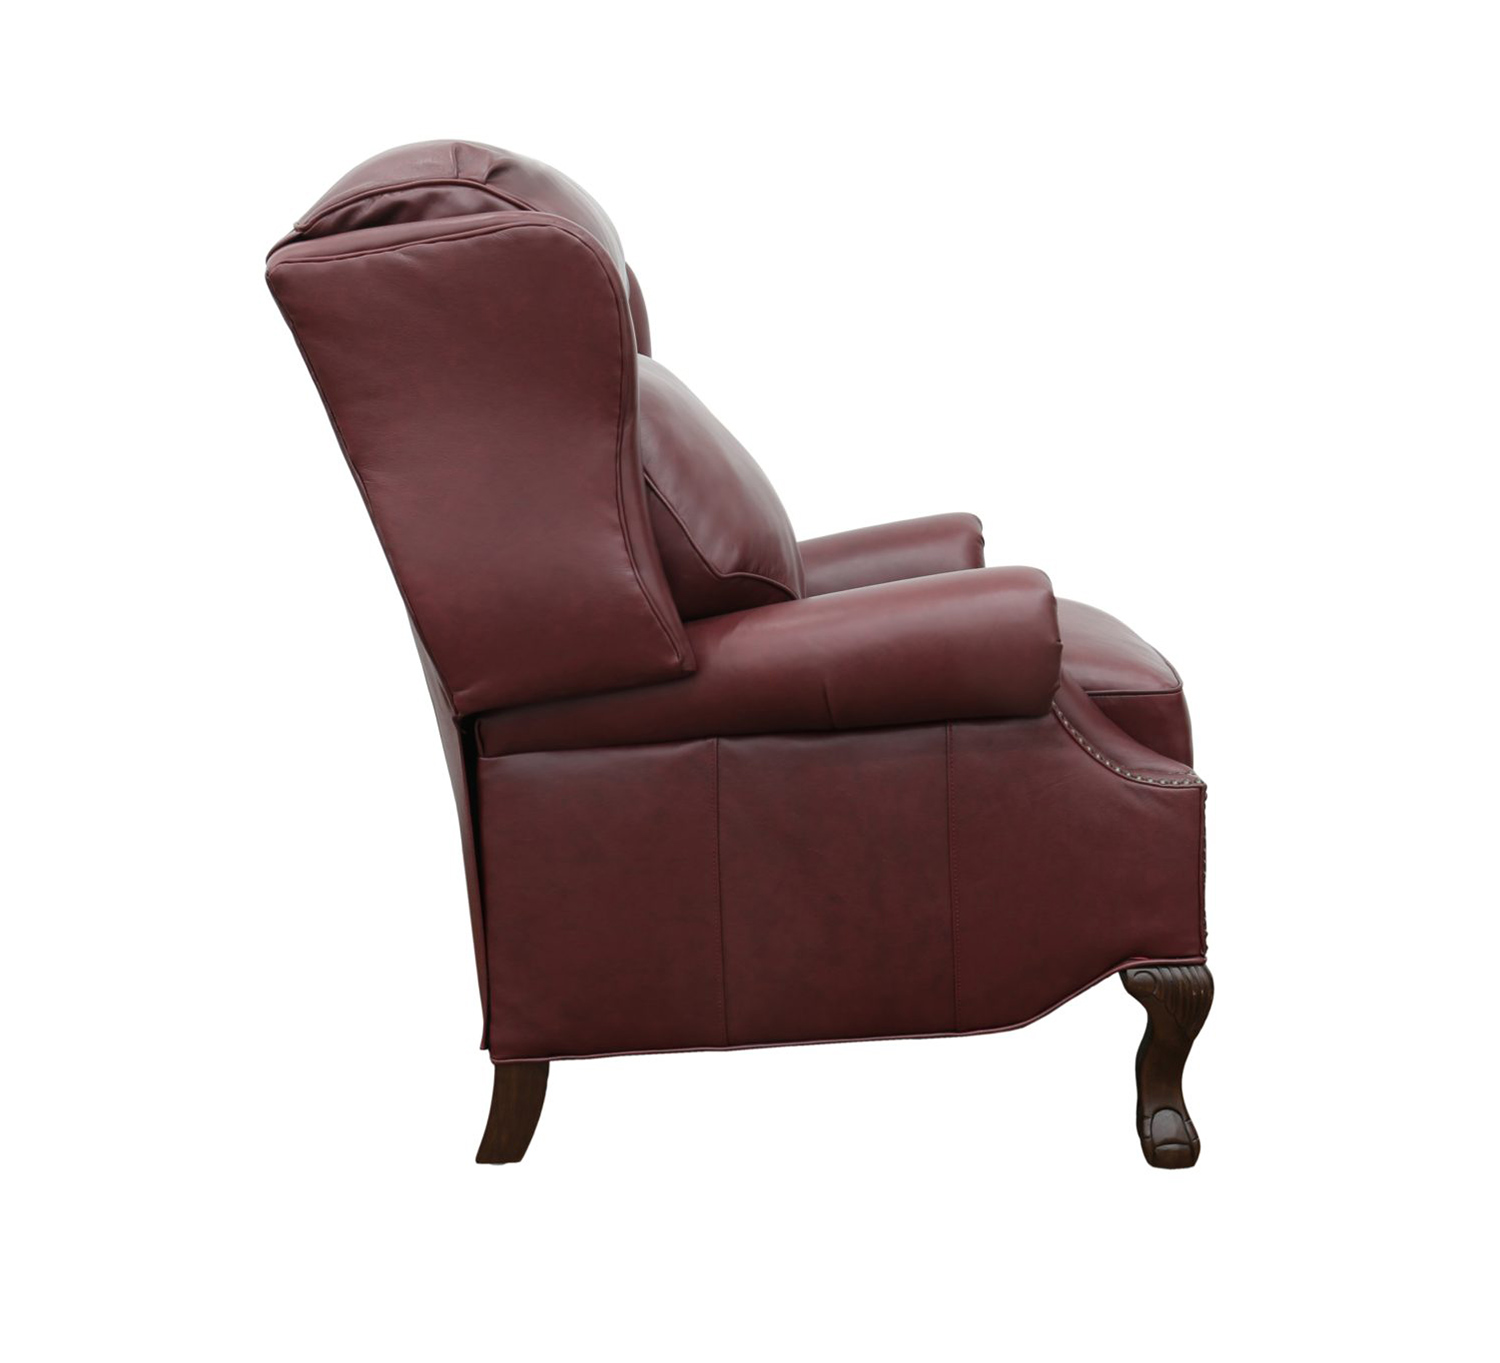 Barcalounger Danbury Recliner Chair - Shoreham Wine/all leather